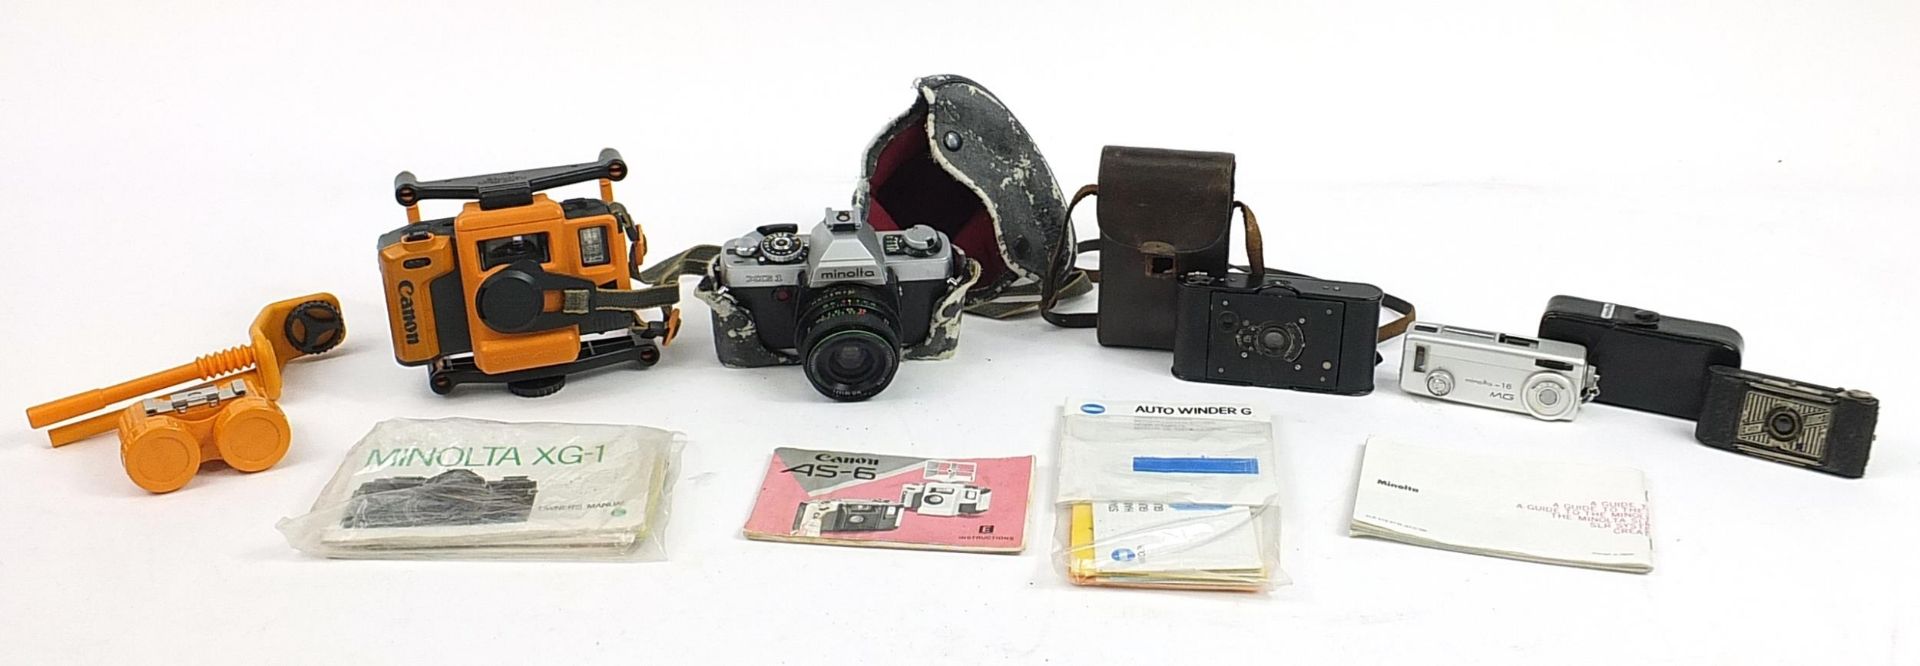 Vintage cameras including Canon AS-6, Minolta XG1 and Minolta-165 camera